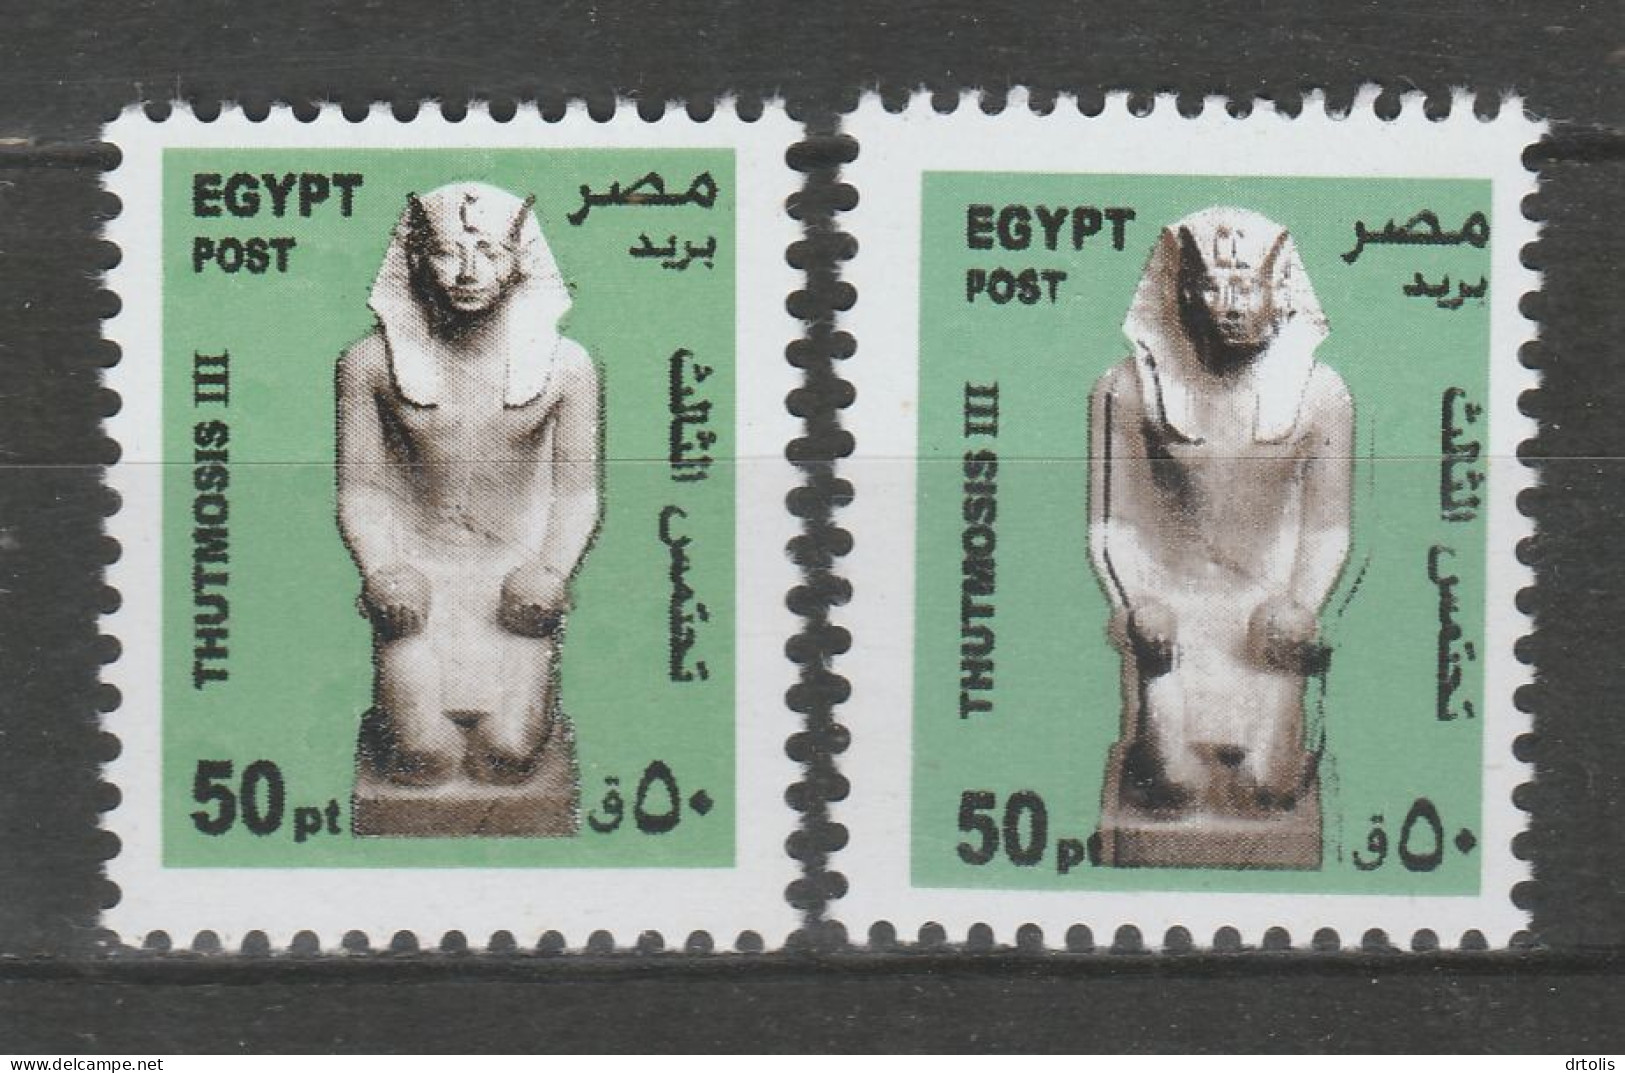 EGYPT / 2013 / A RARE PRINTING ERROR / THUTMOSE III / MNH / VF - Ungebraucht